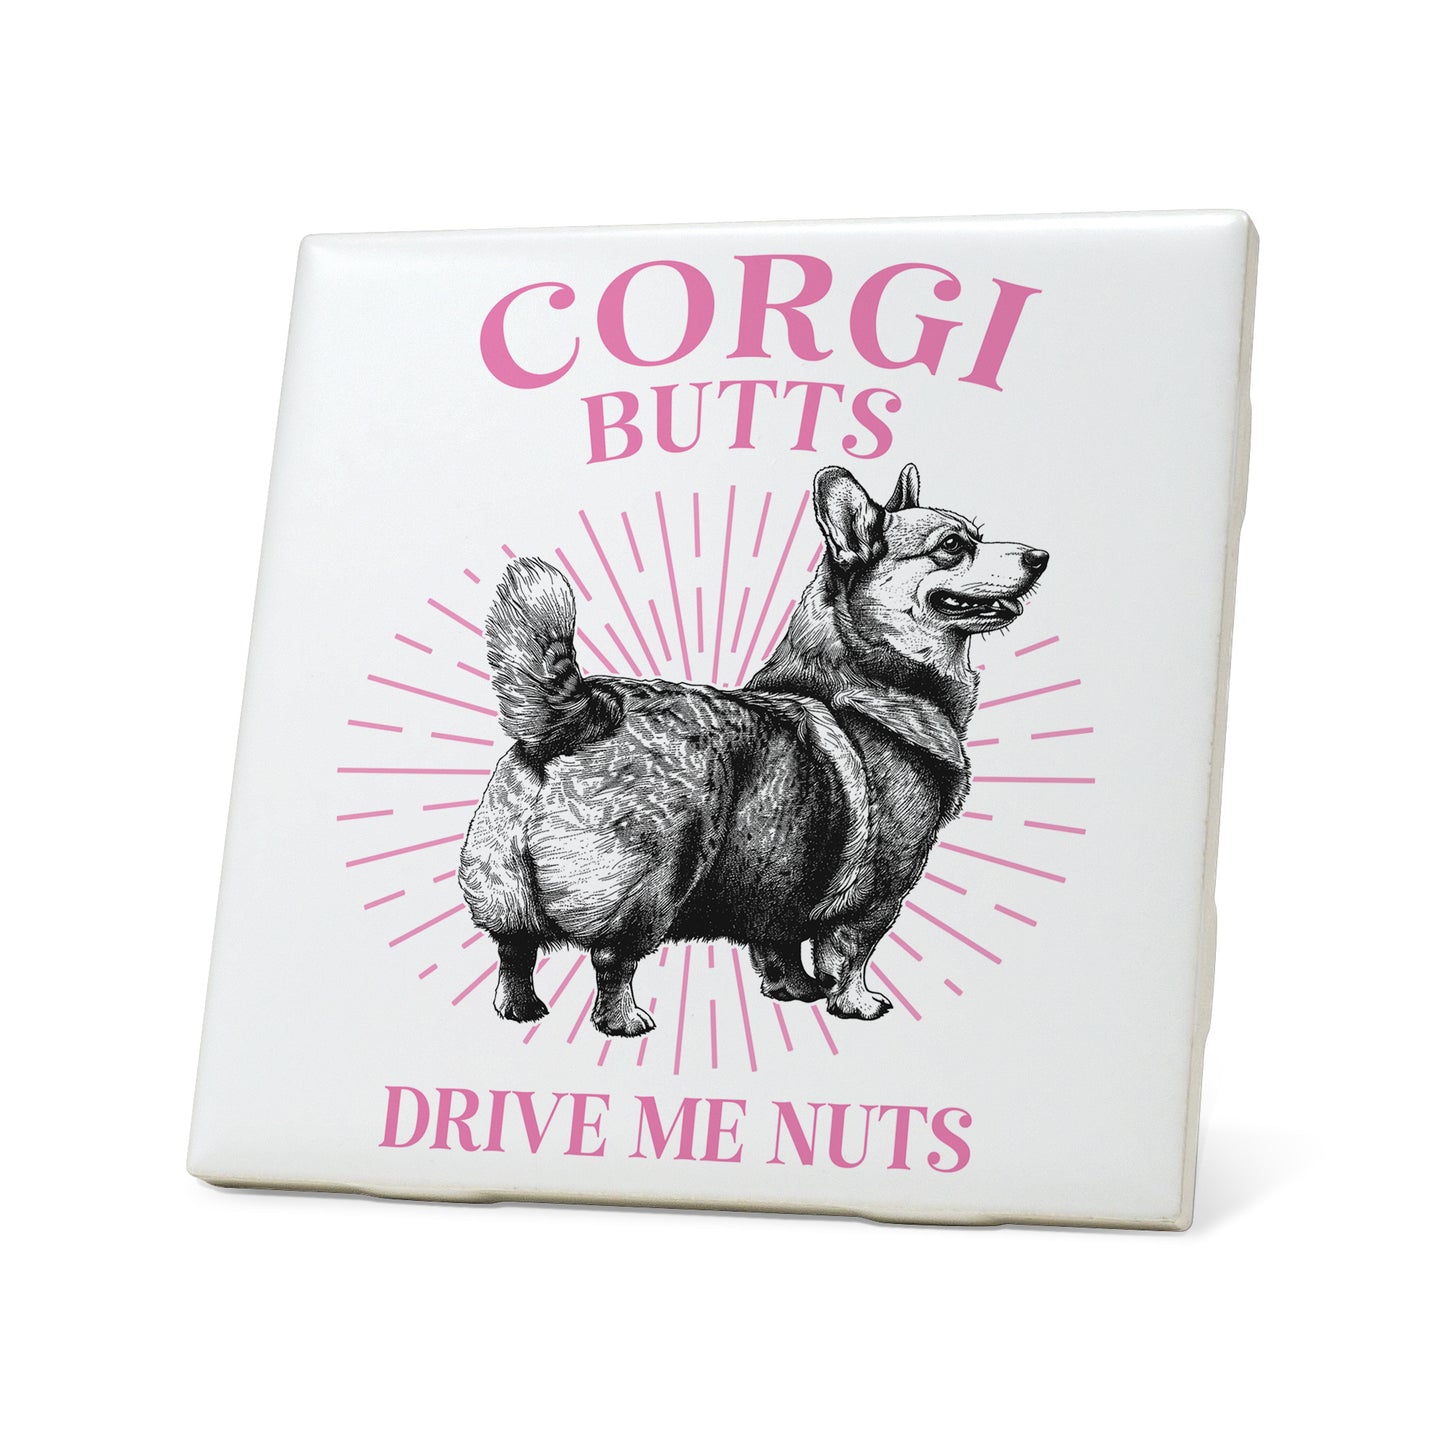 Corgi butts drive me nuts Graphic Coasters